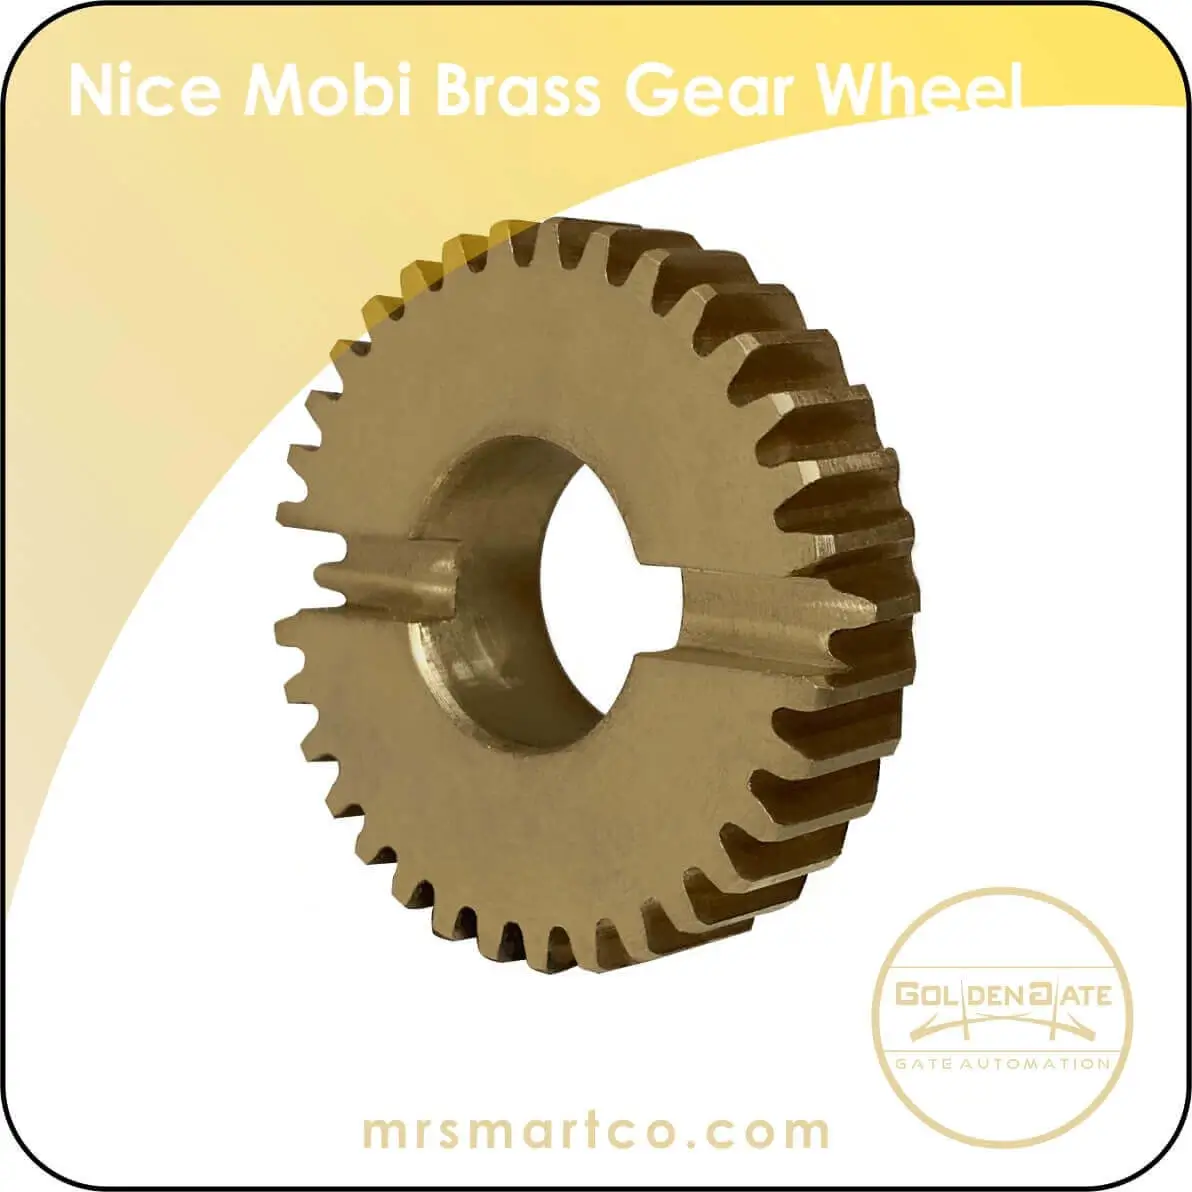 Nice mobi brass gear wheel